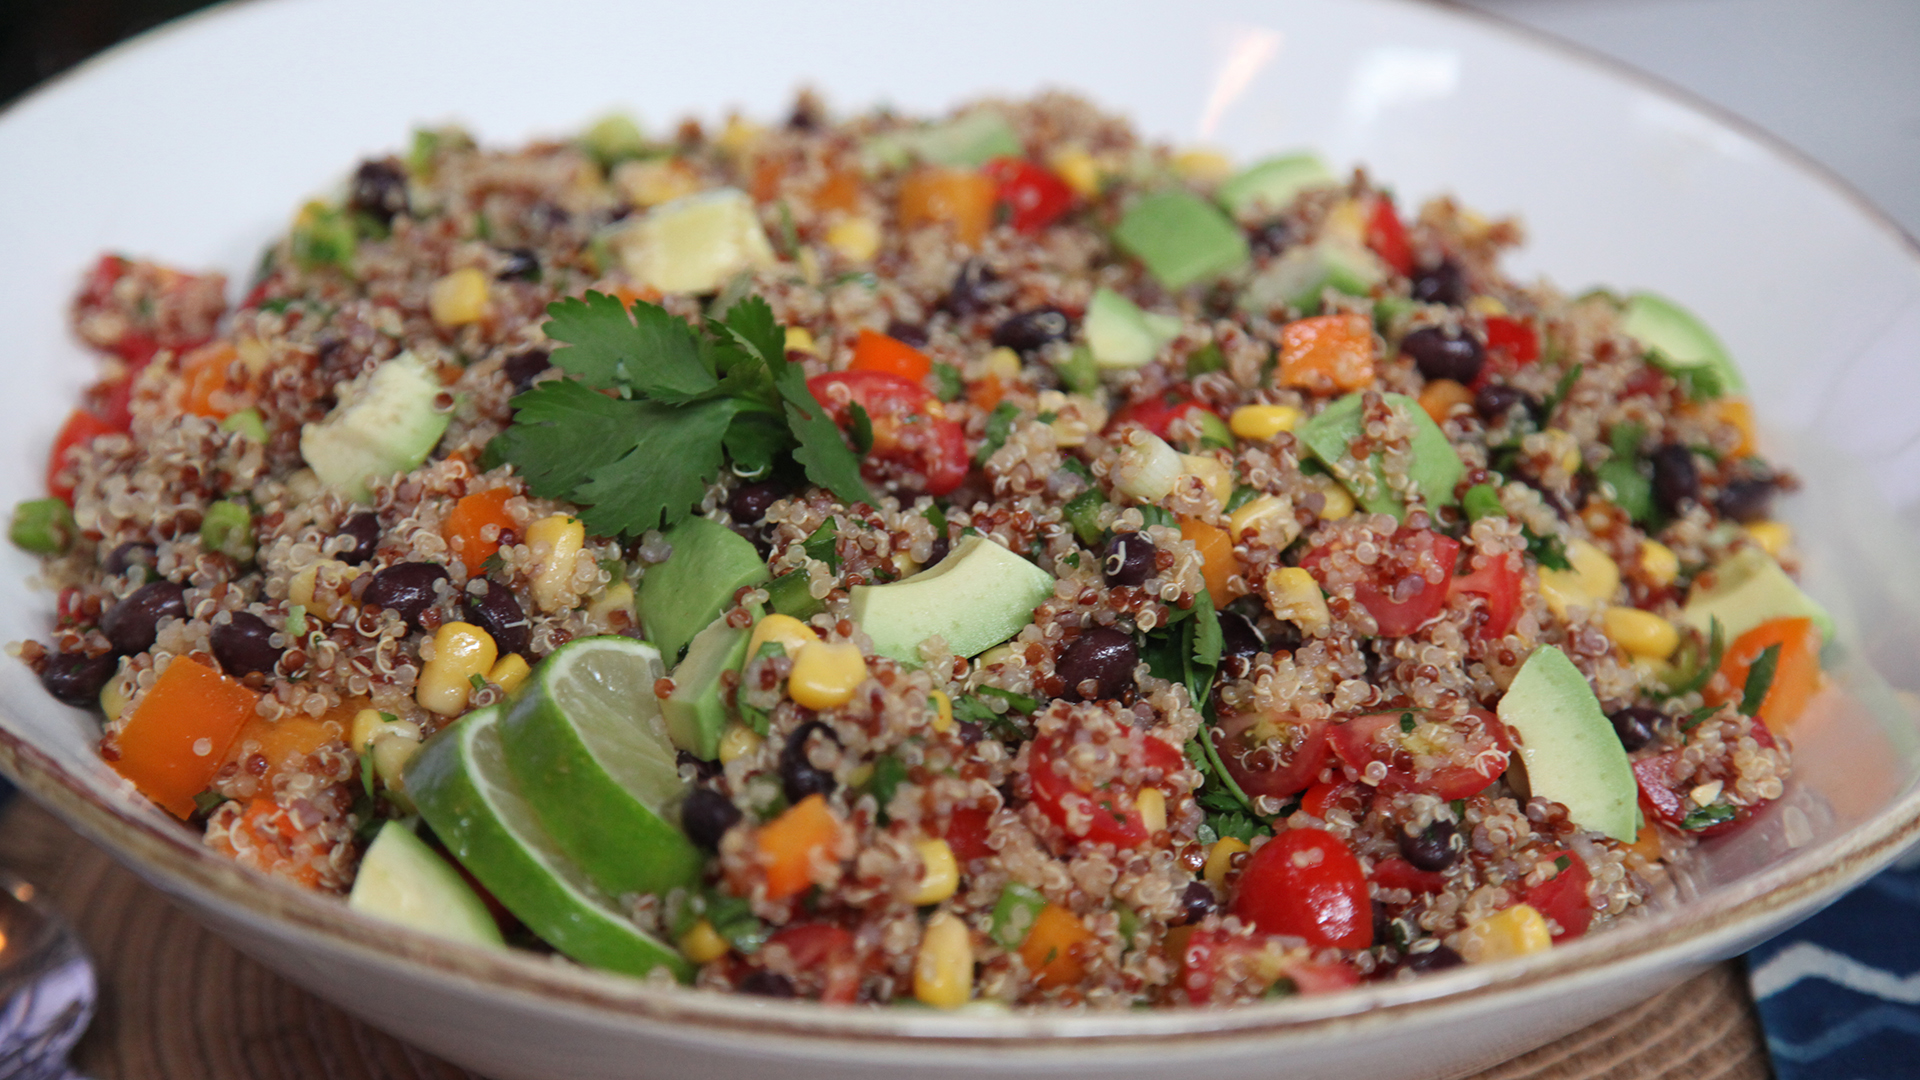 Tex-mex quinoa salad with chili-lime dressing